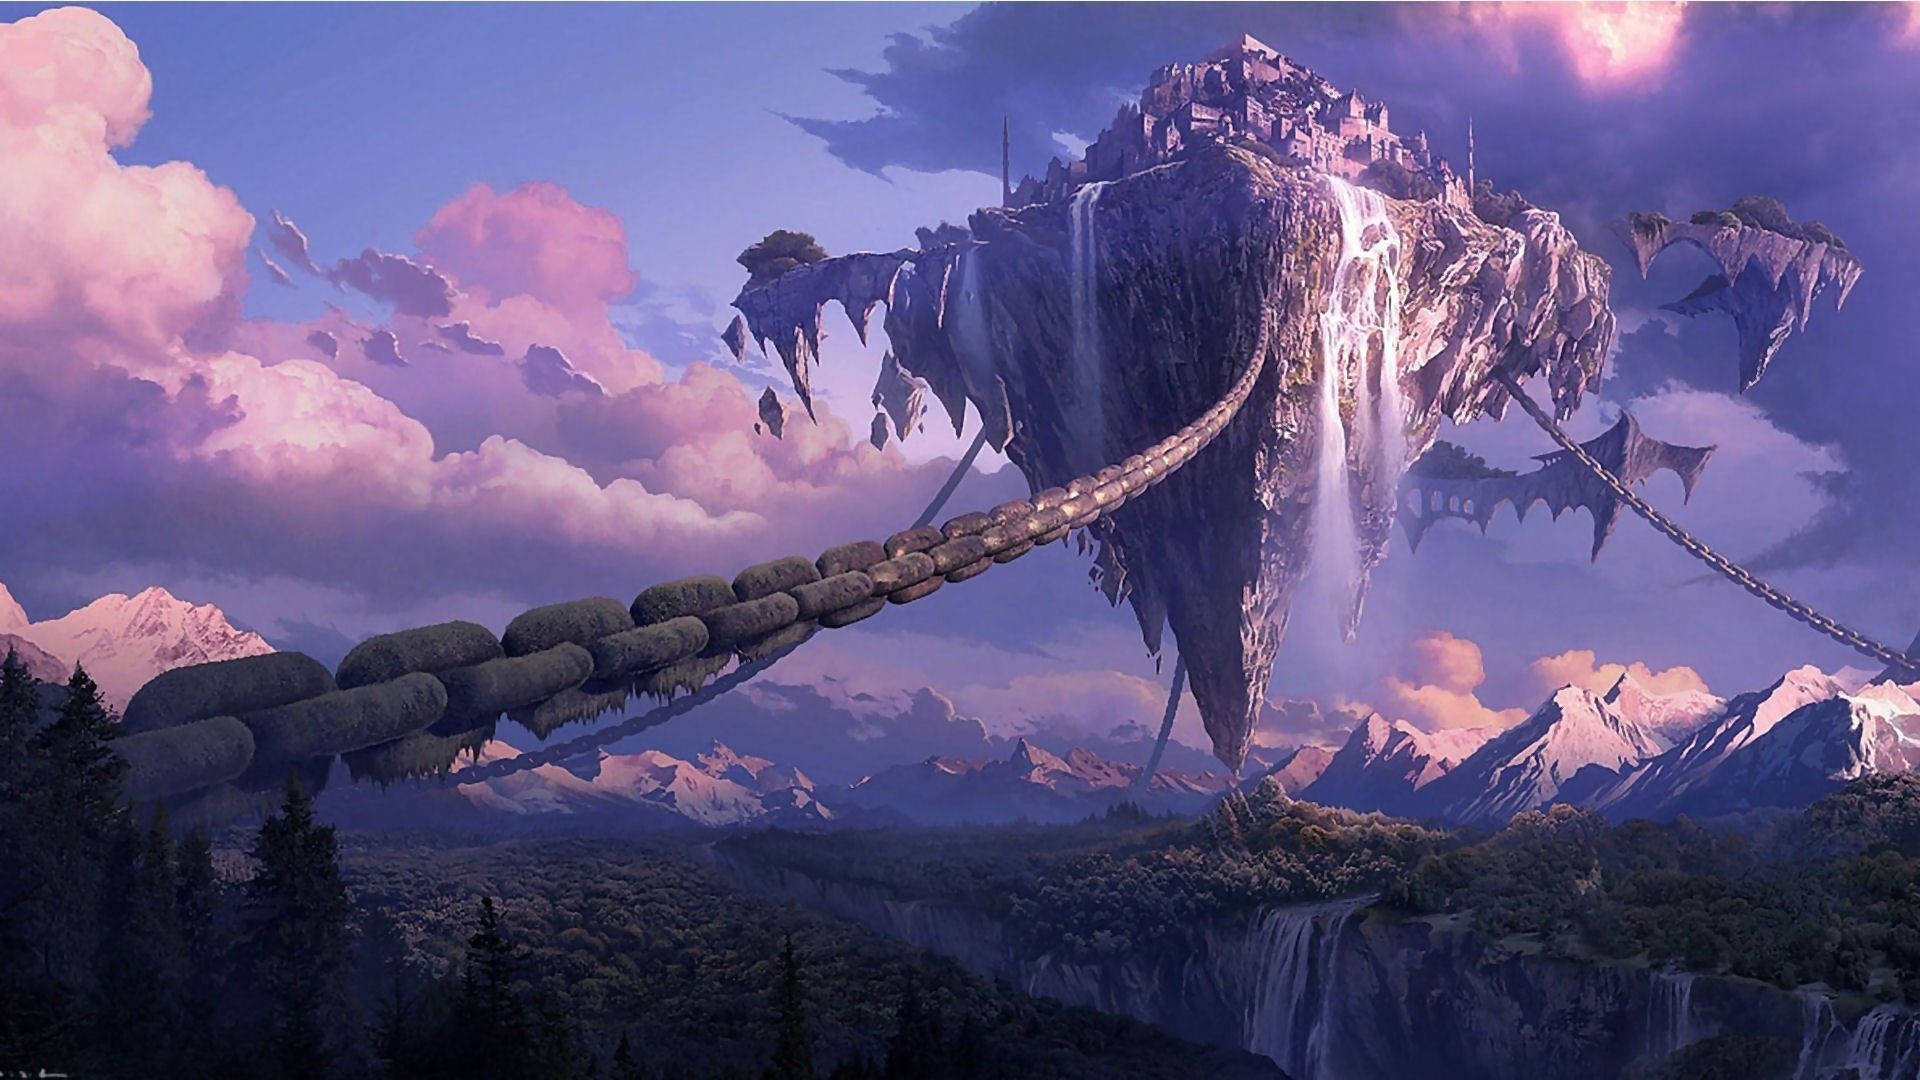 An enchanted floating land awaits adventure! Wallpaper